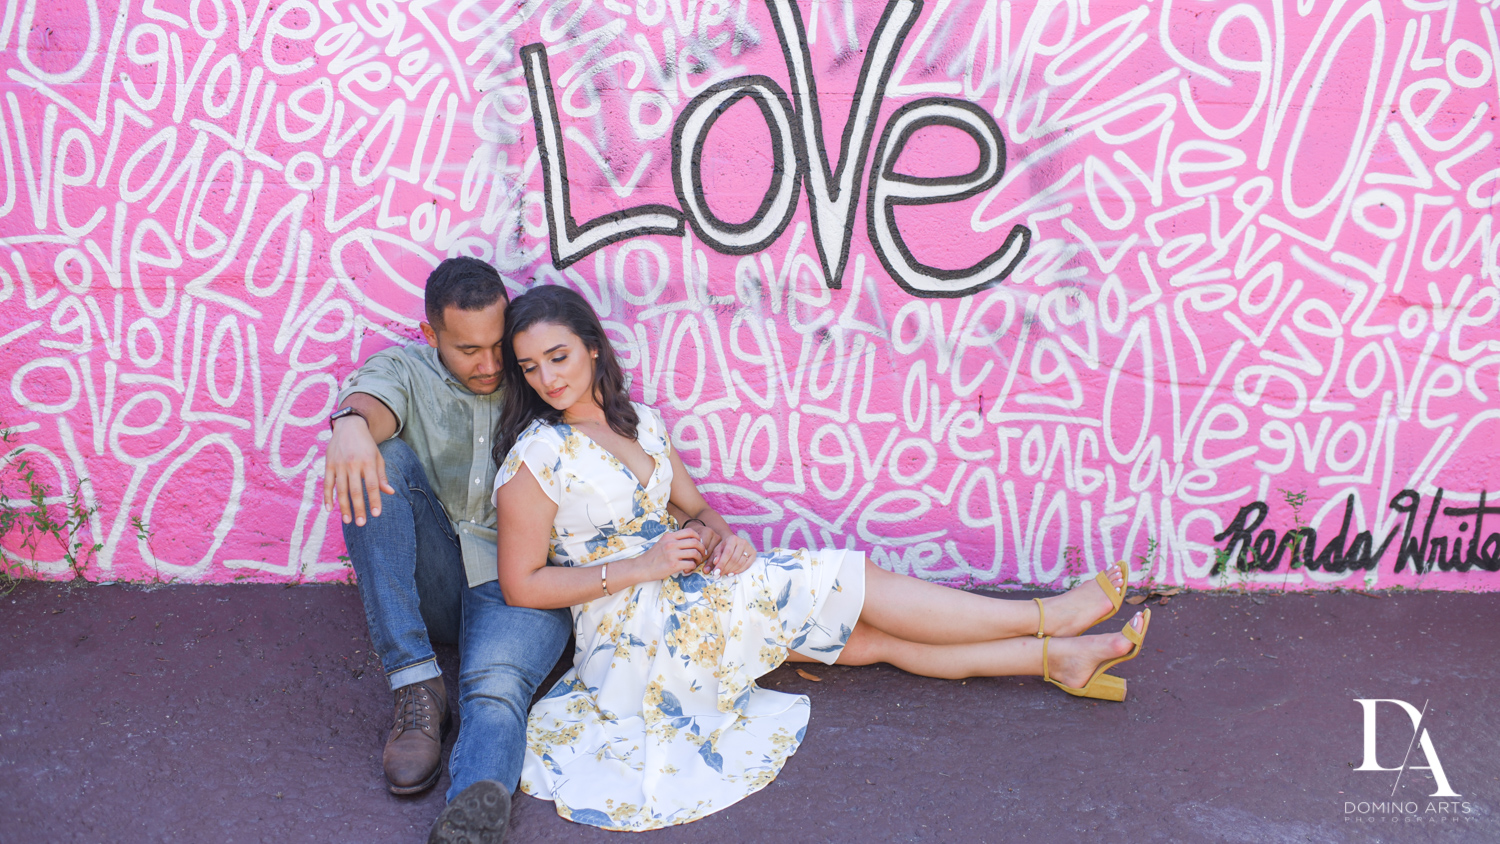 Romantic Engagement Session at Graffiti Walls by Domino Arts Photography